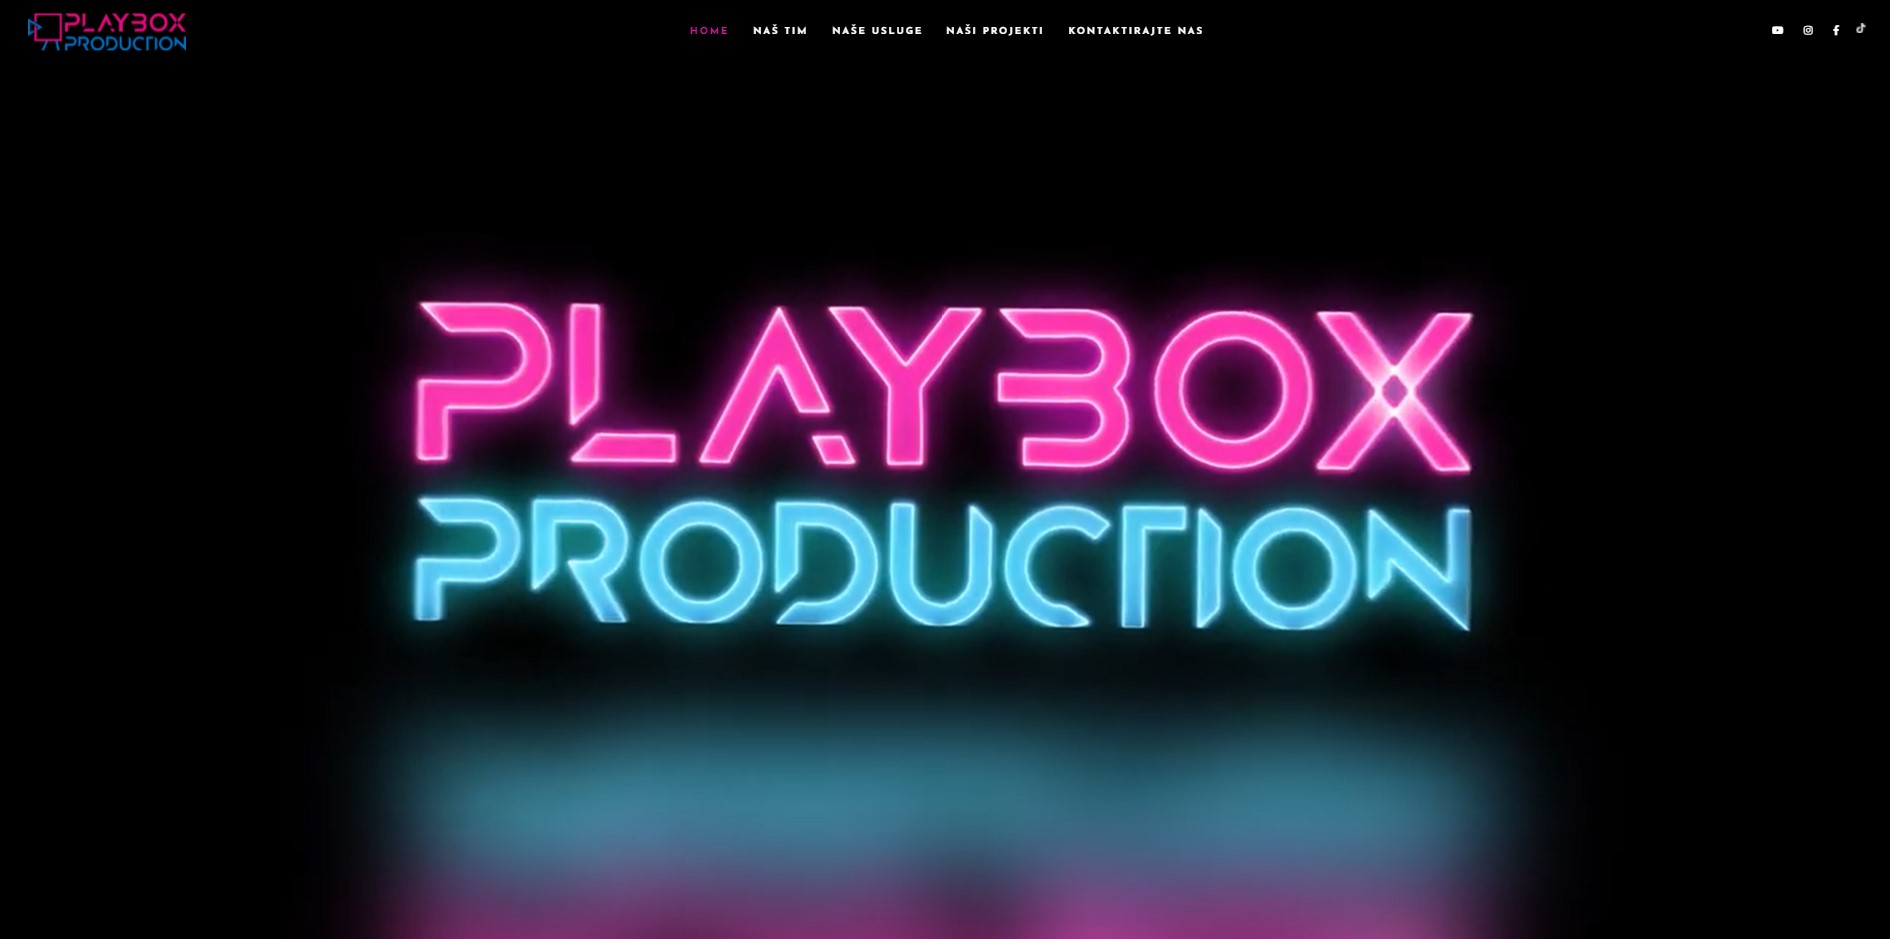 startseite playbox production